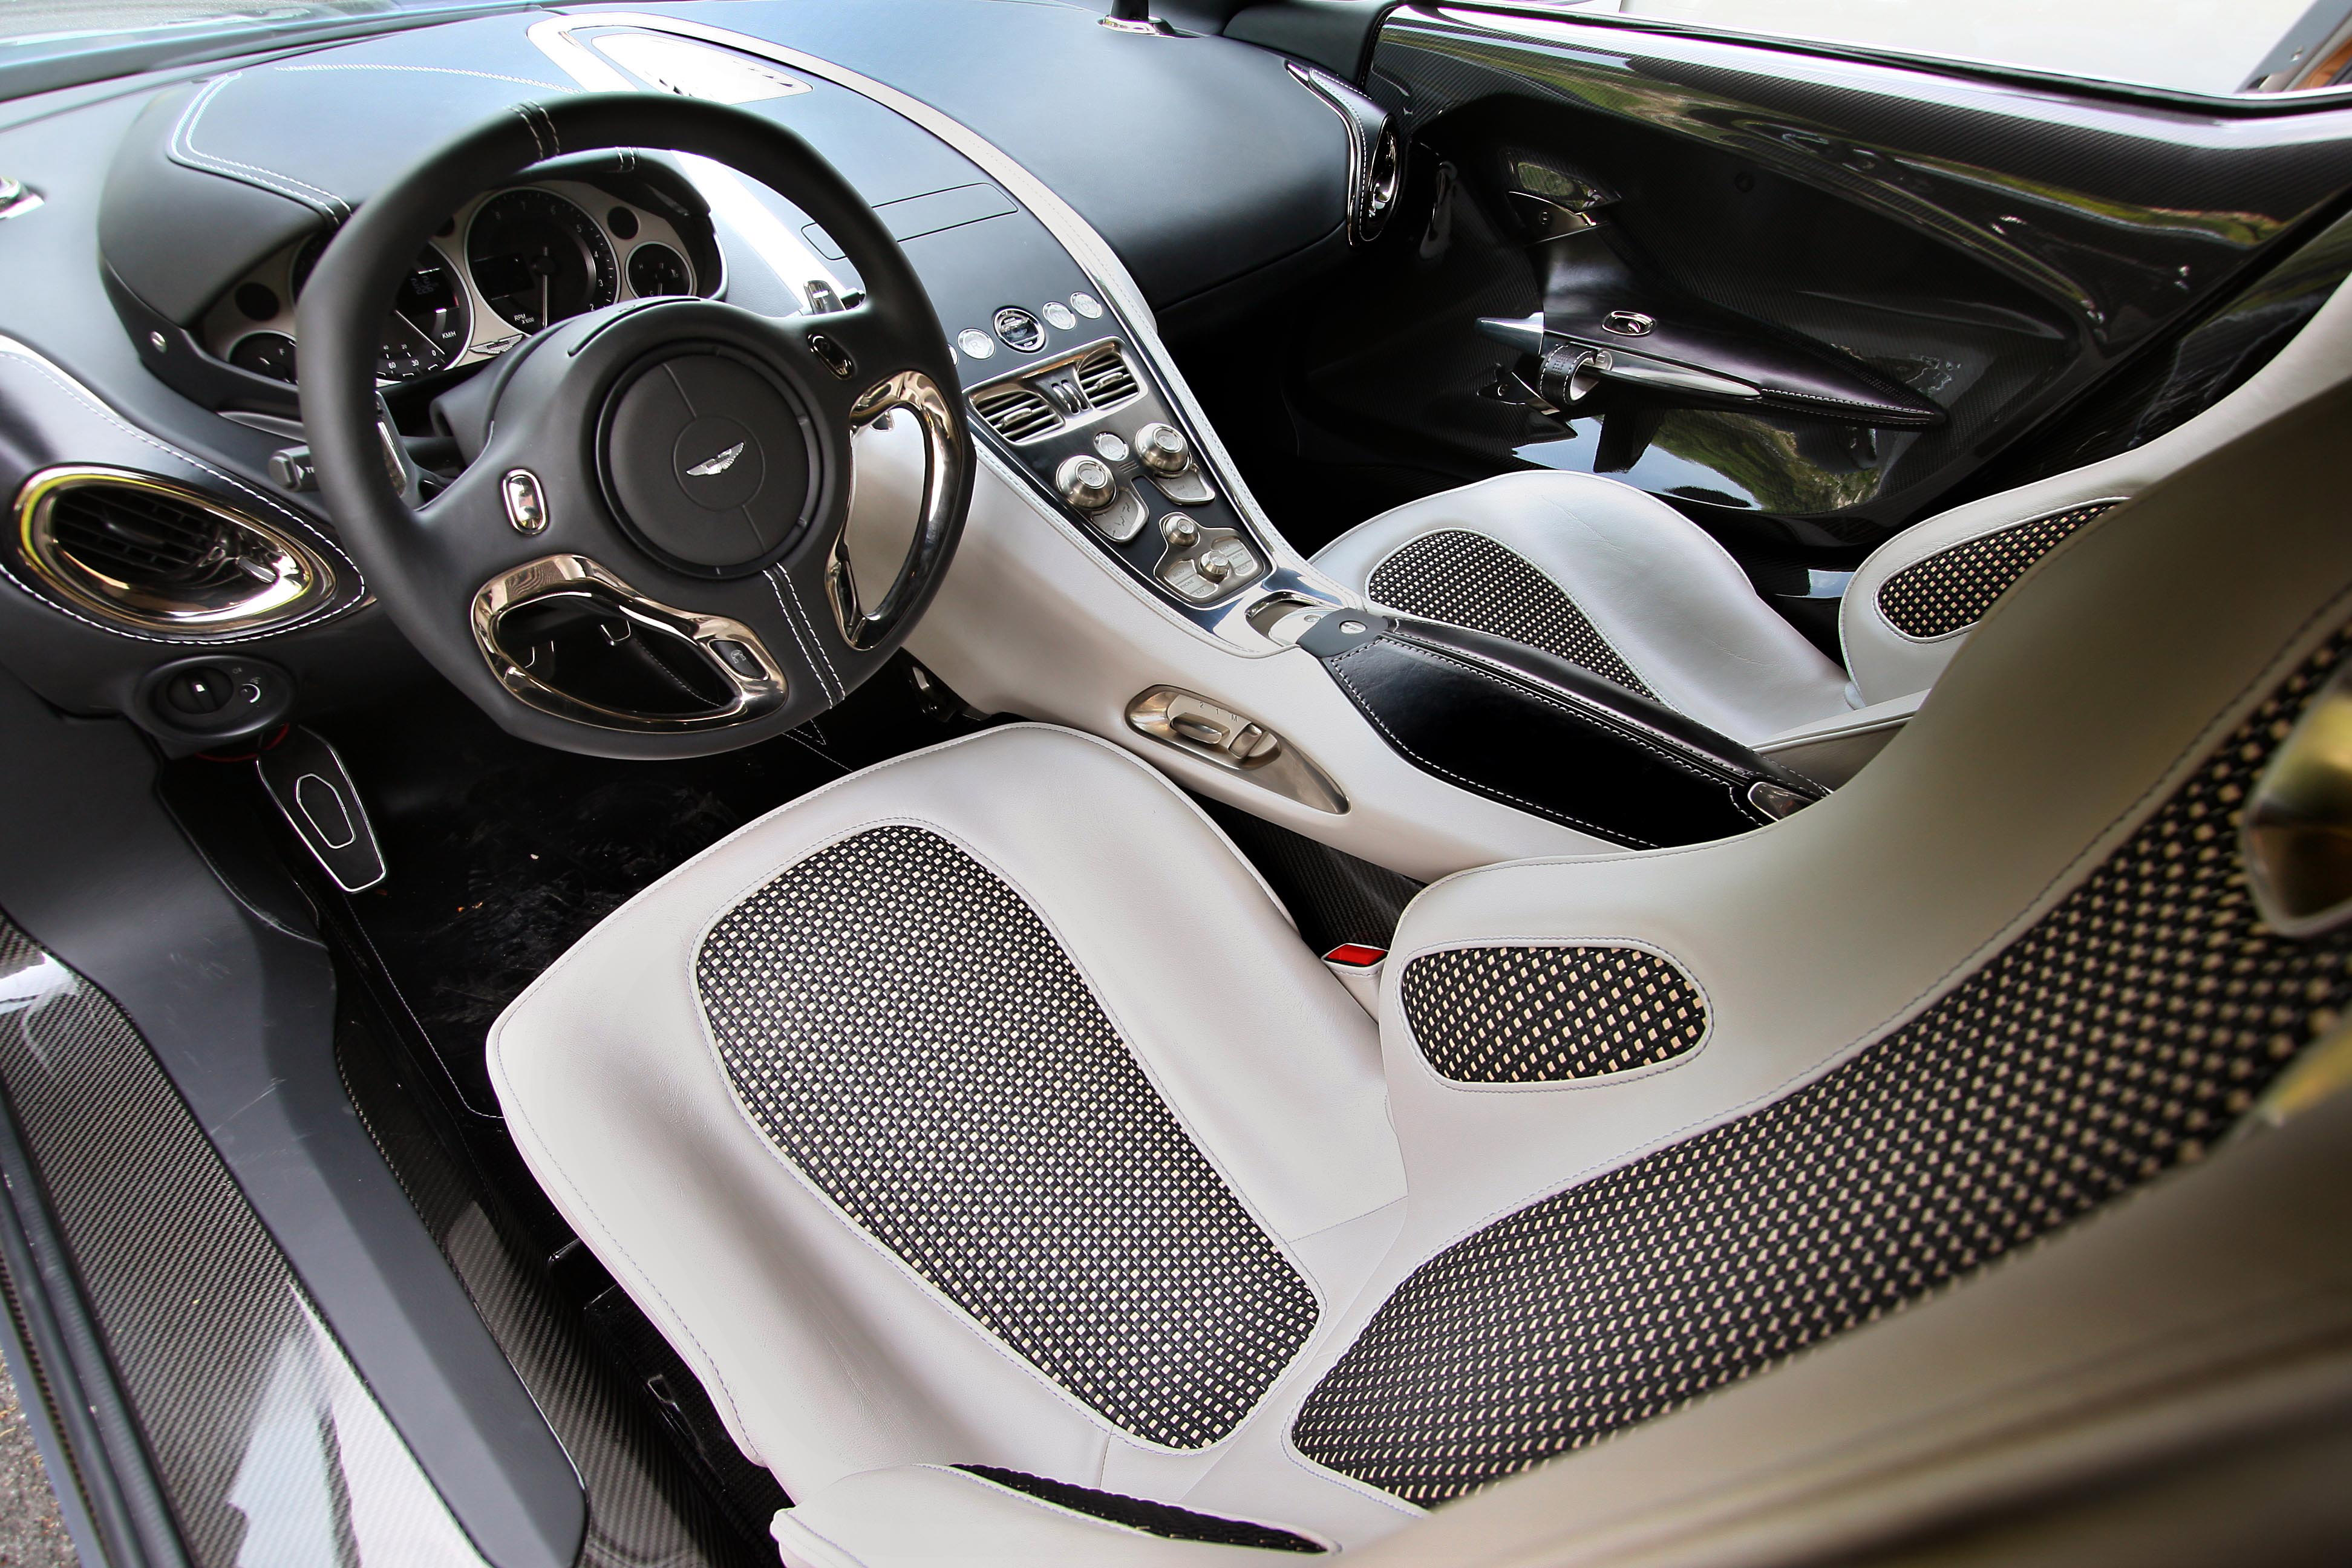 Aston Martin, car interiors - desktop wallpaper